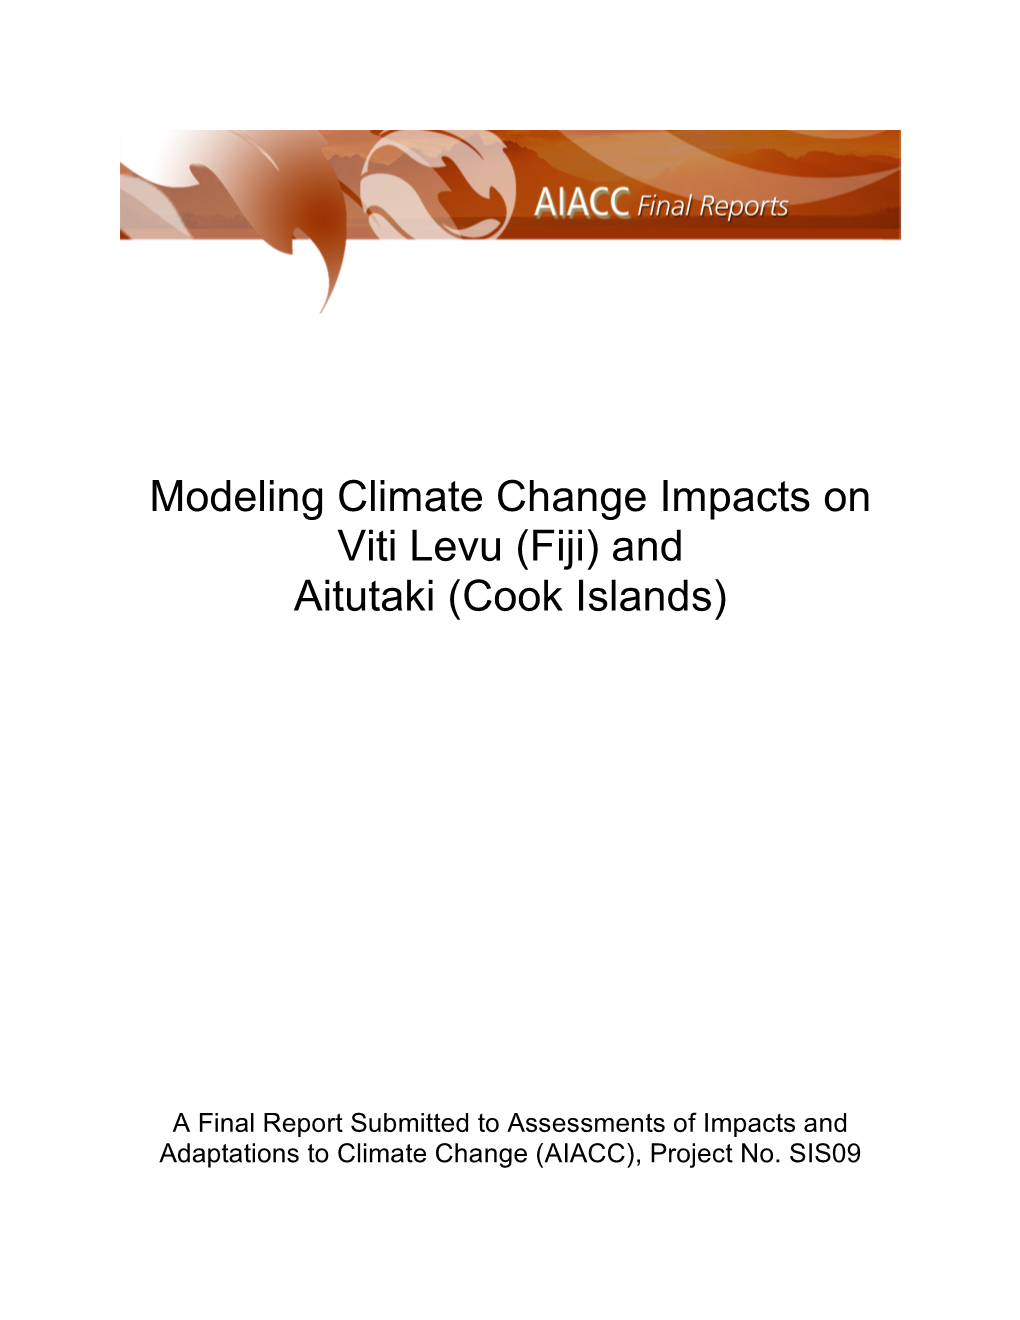 Modeling Climate Change Impacts on Viti Levu (Fiji) and Aitutaki (Cook Islands)